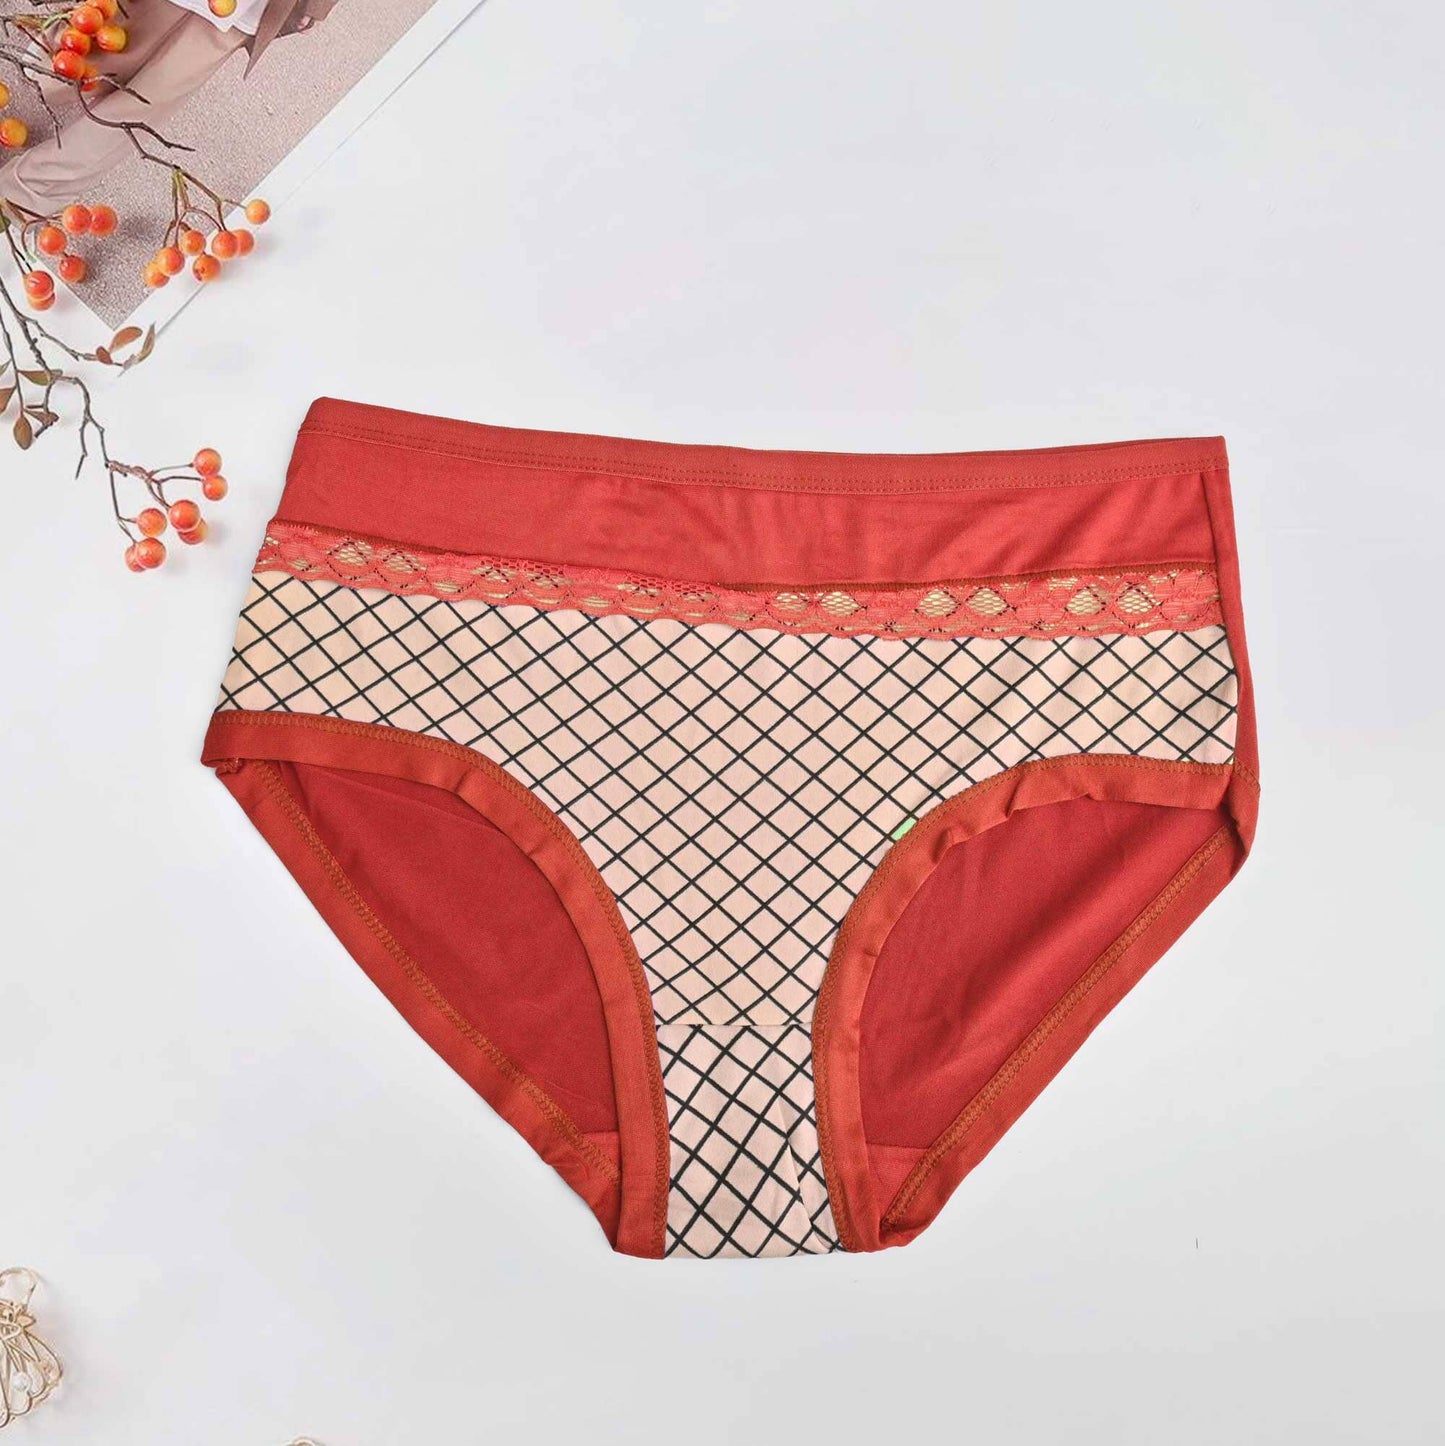 Shuifanxin Women's Lace Design Underwear Panties Women's Panties RAM Red 30-34 inches 